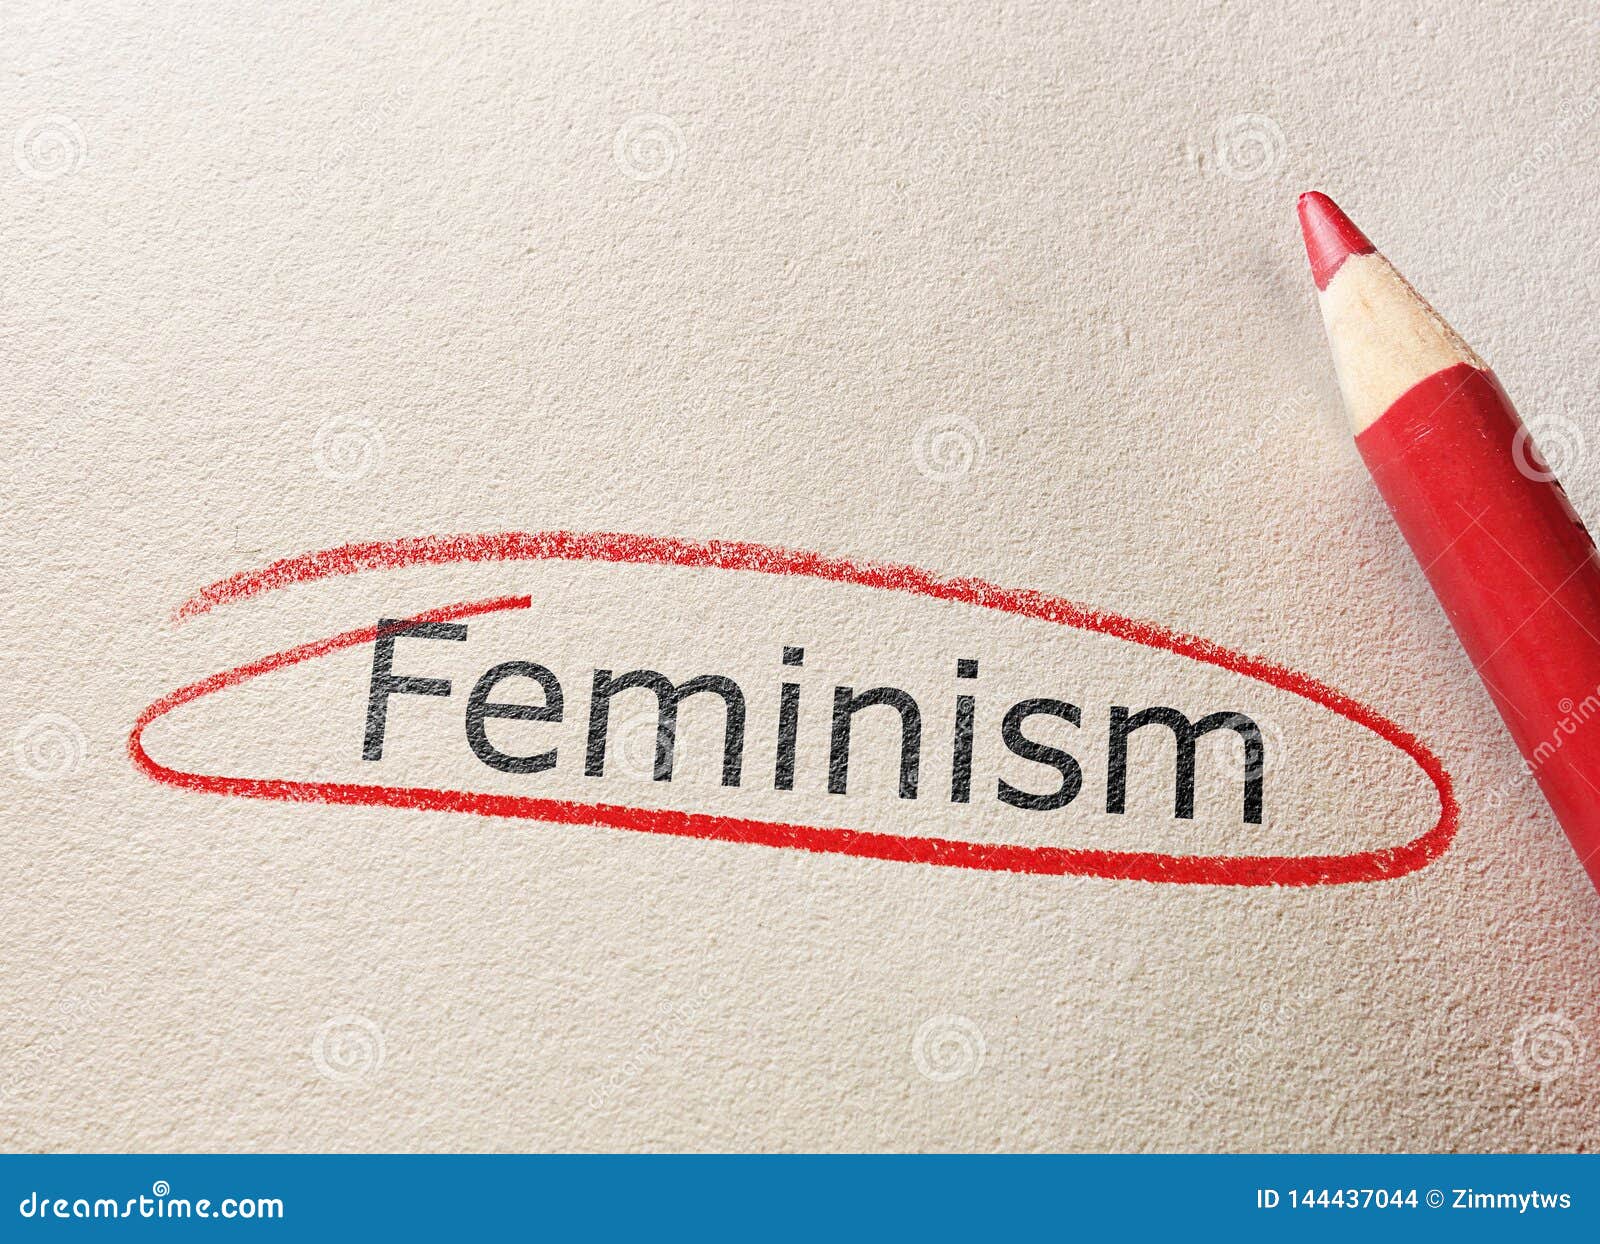 feminism red circle